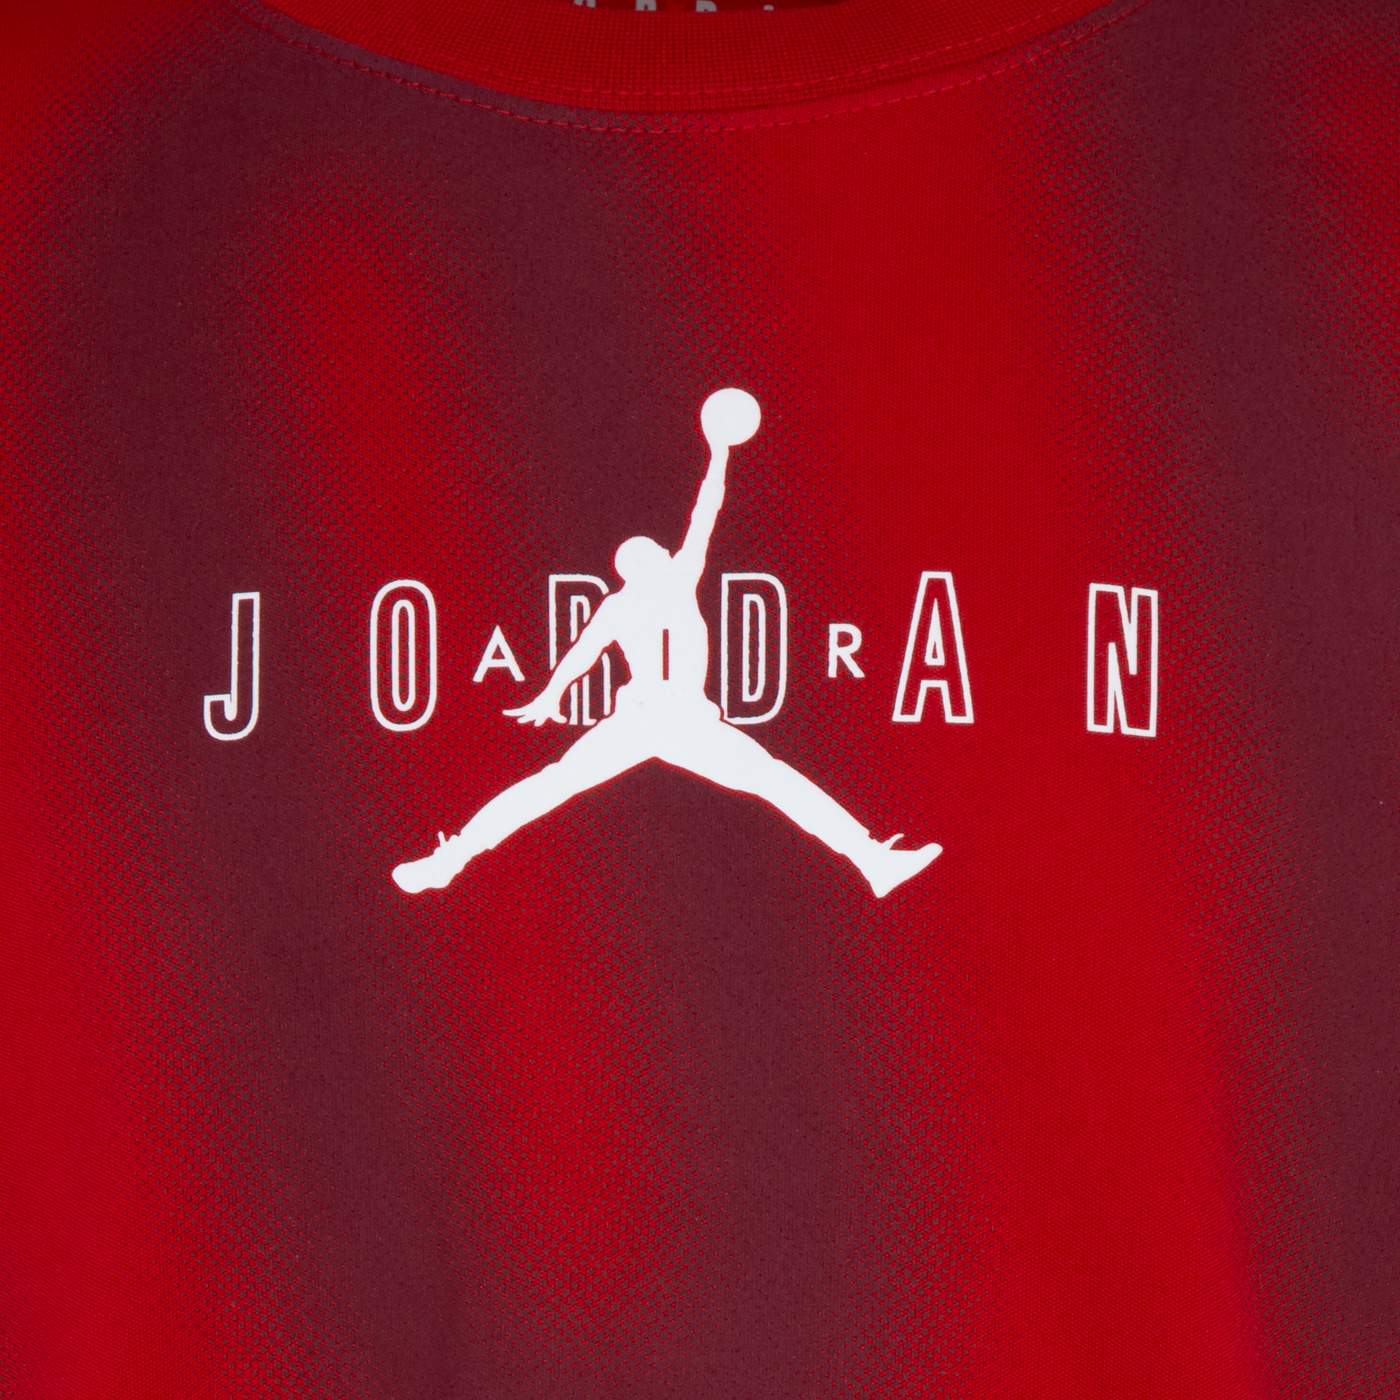 Jordan HBR Vision Dri-FIT Tee T Shirt Jordan   